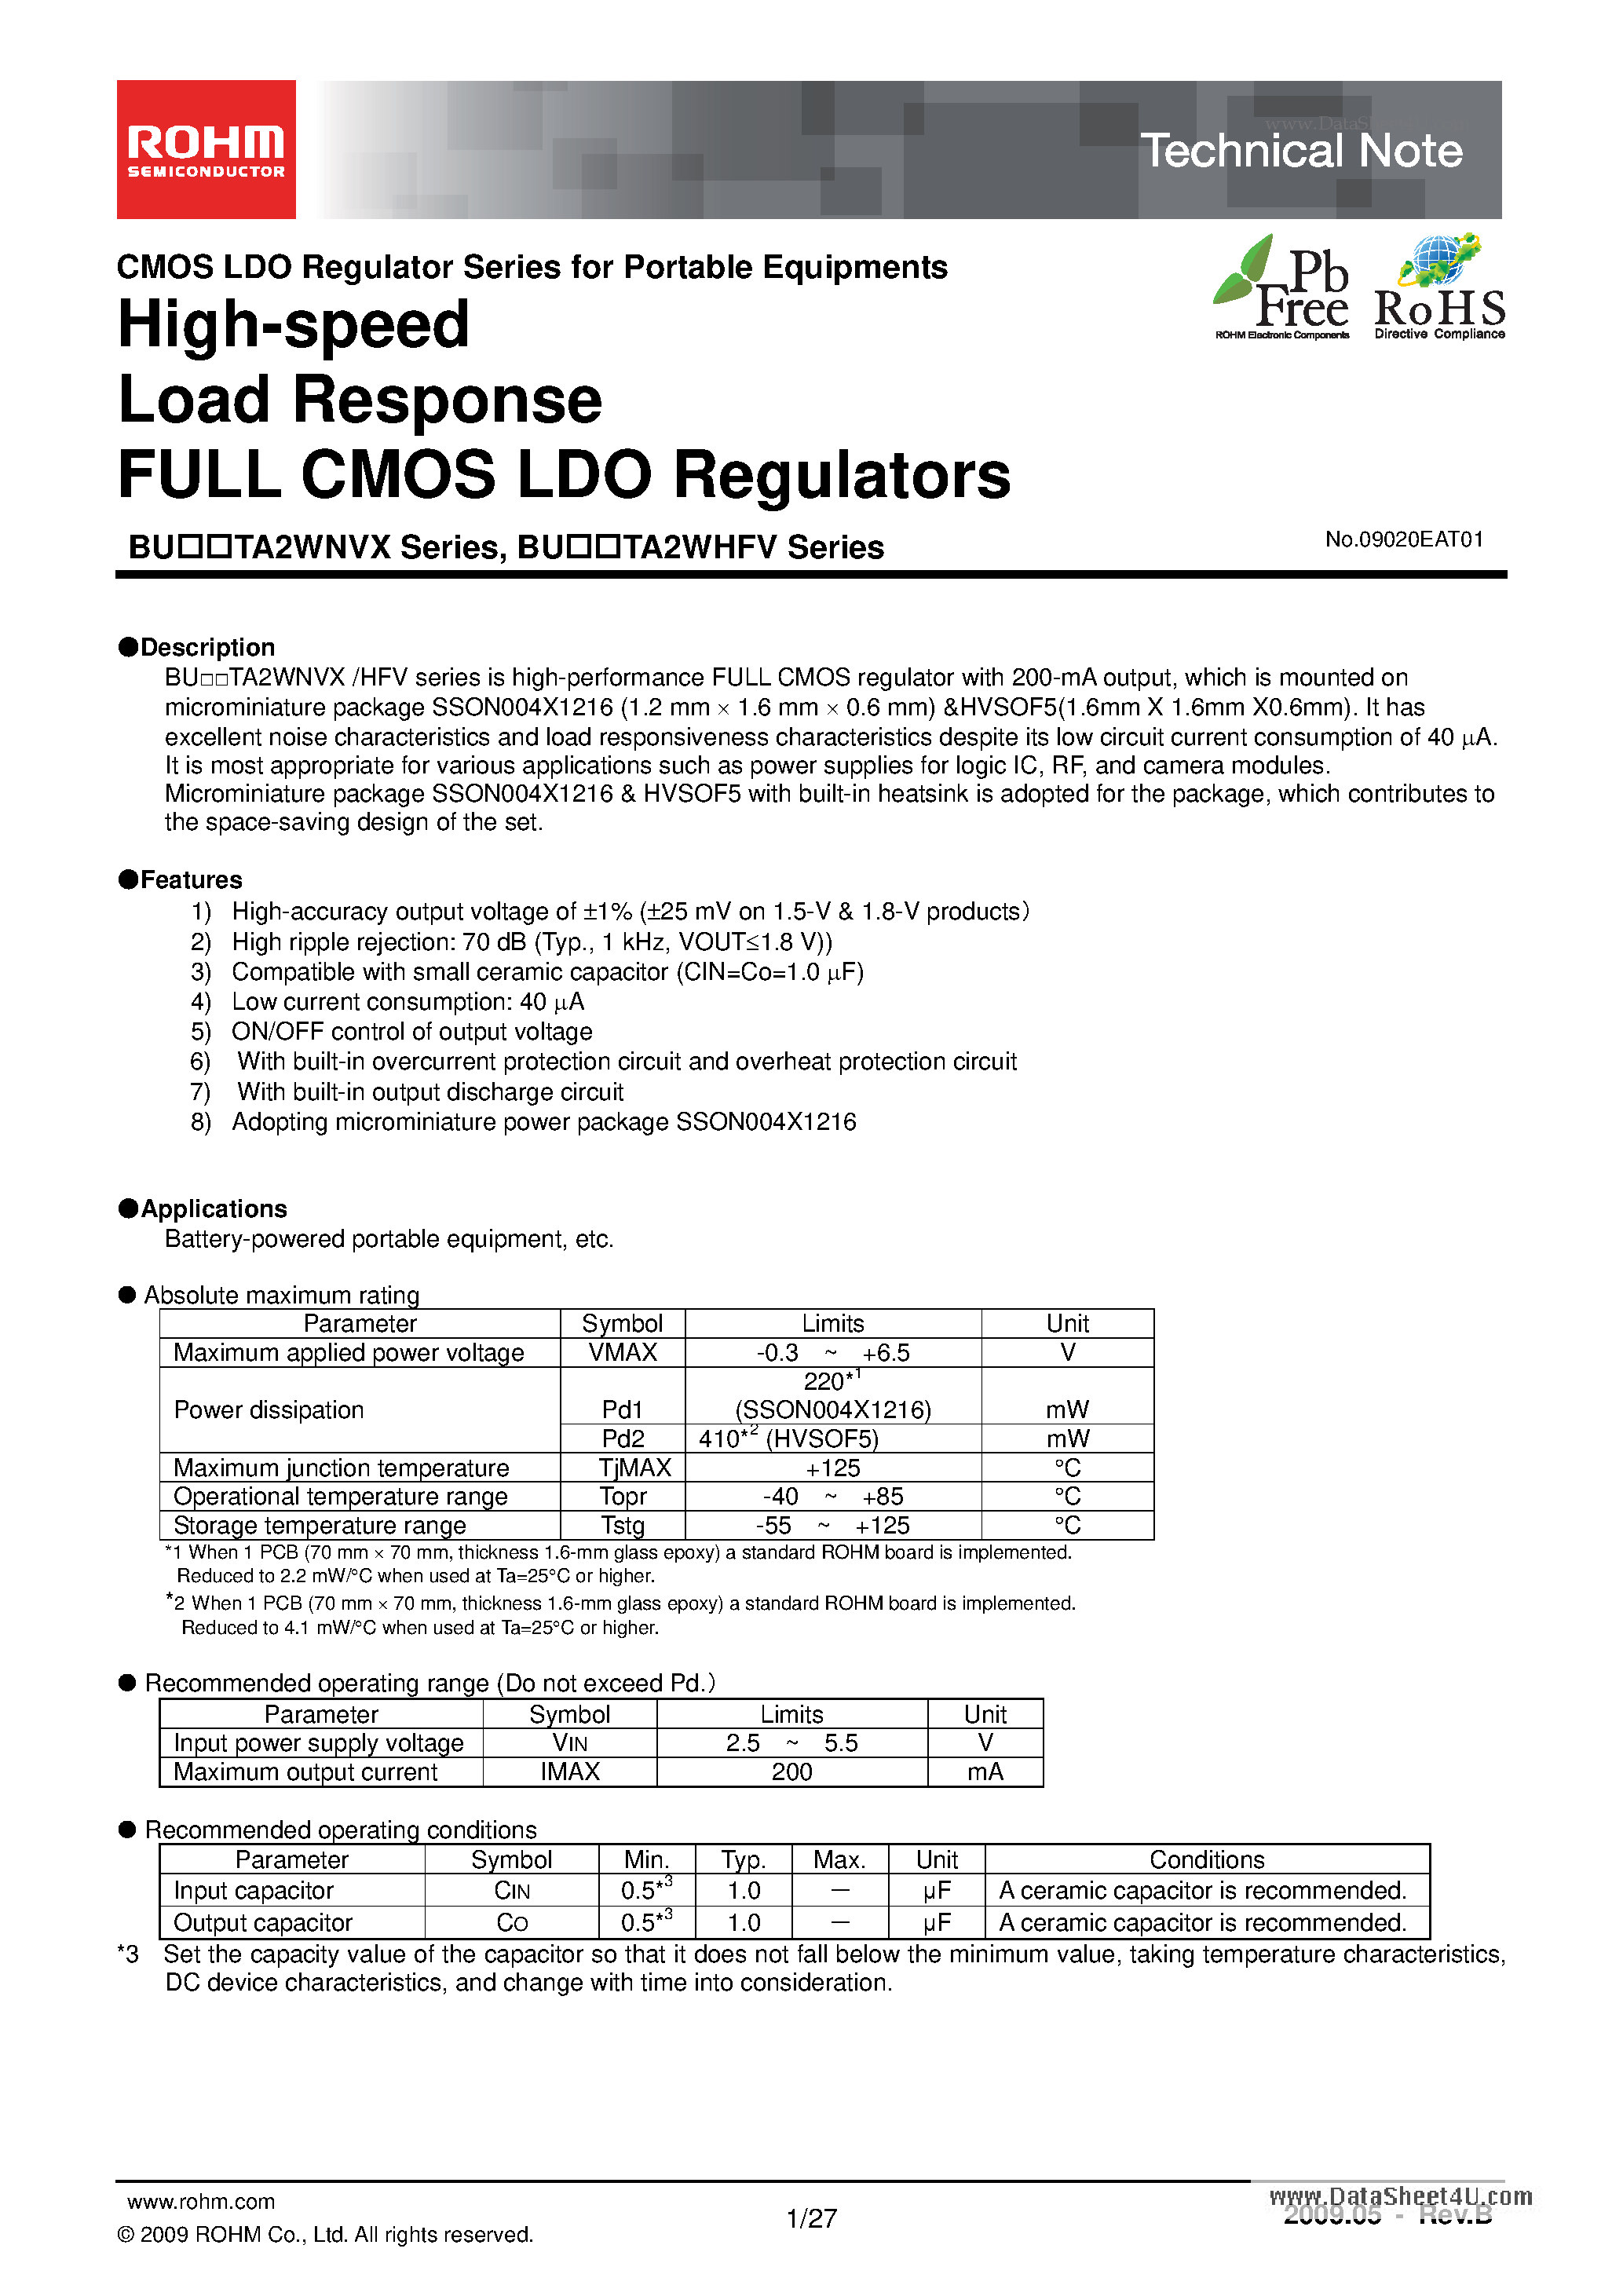 Даташит BU15TA2WHFV-High-speed Load Response FULL CMOS LDO Regulators страница 1